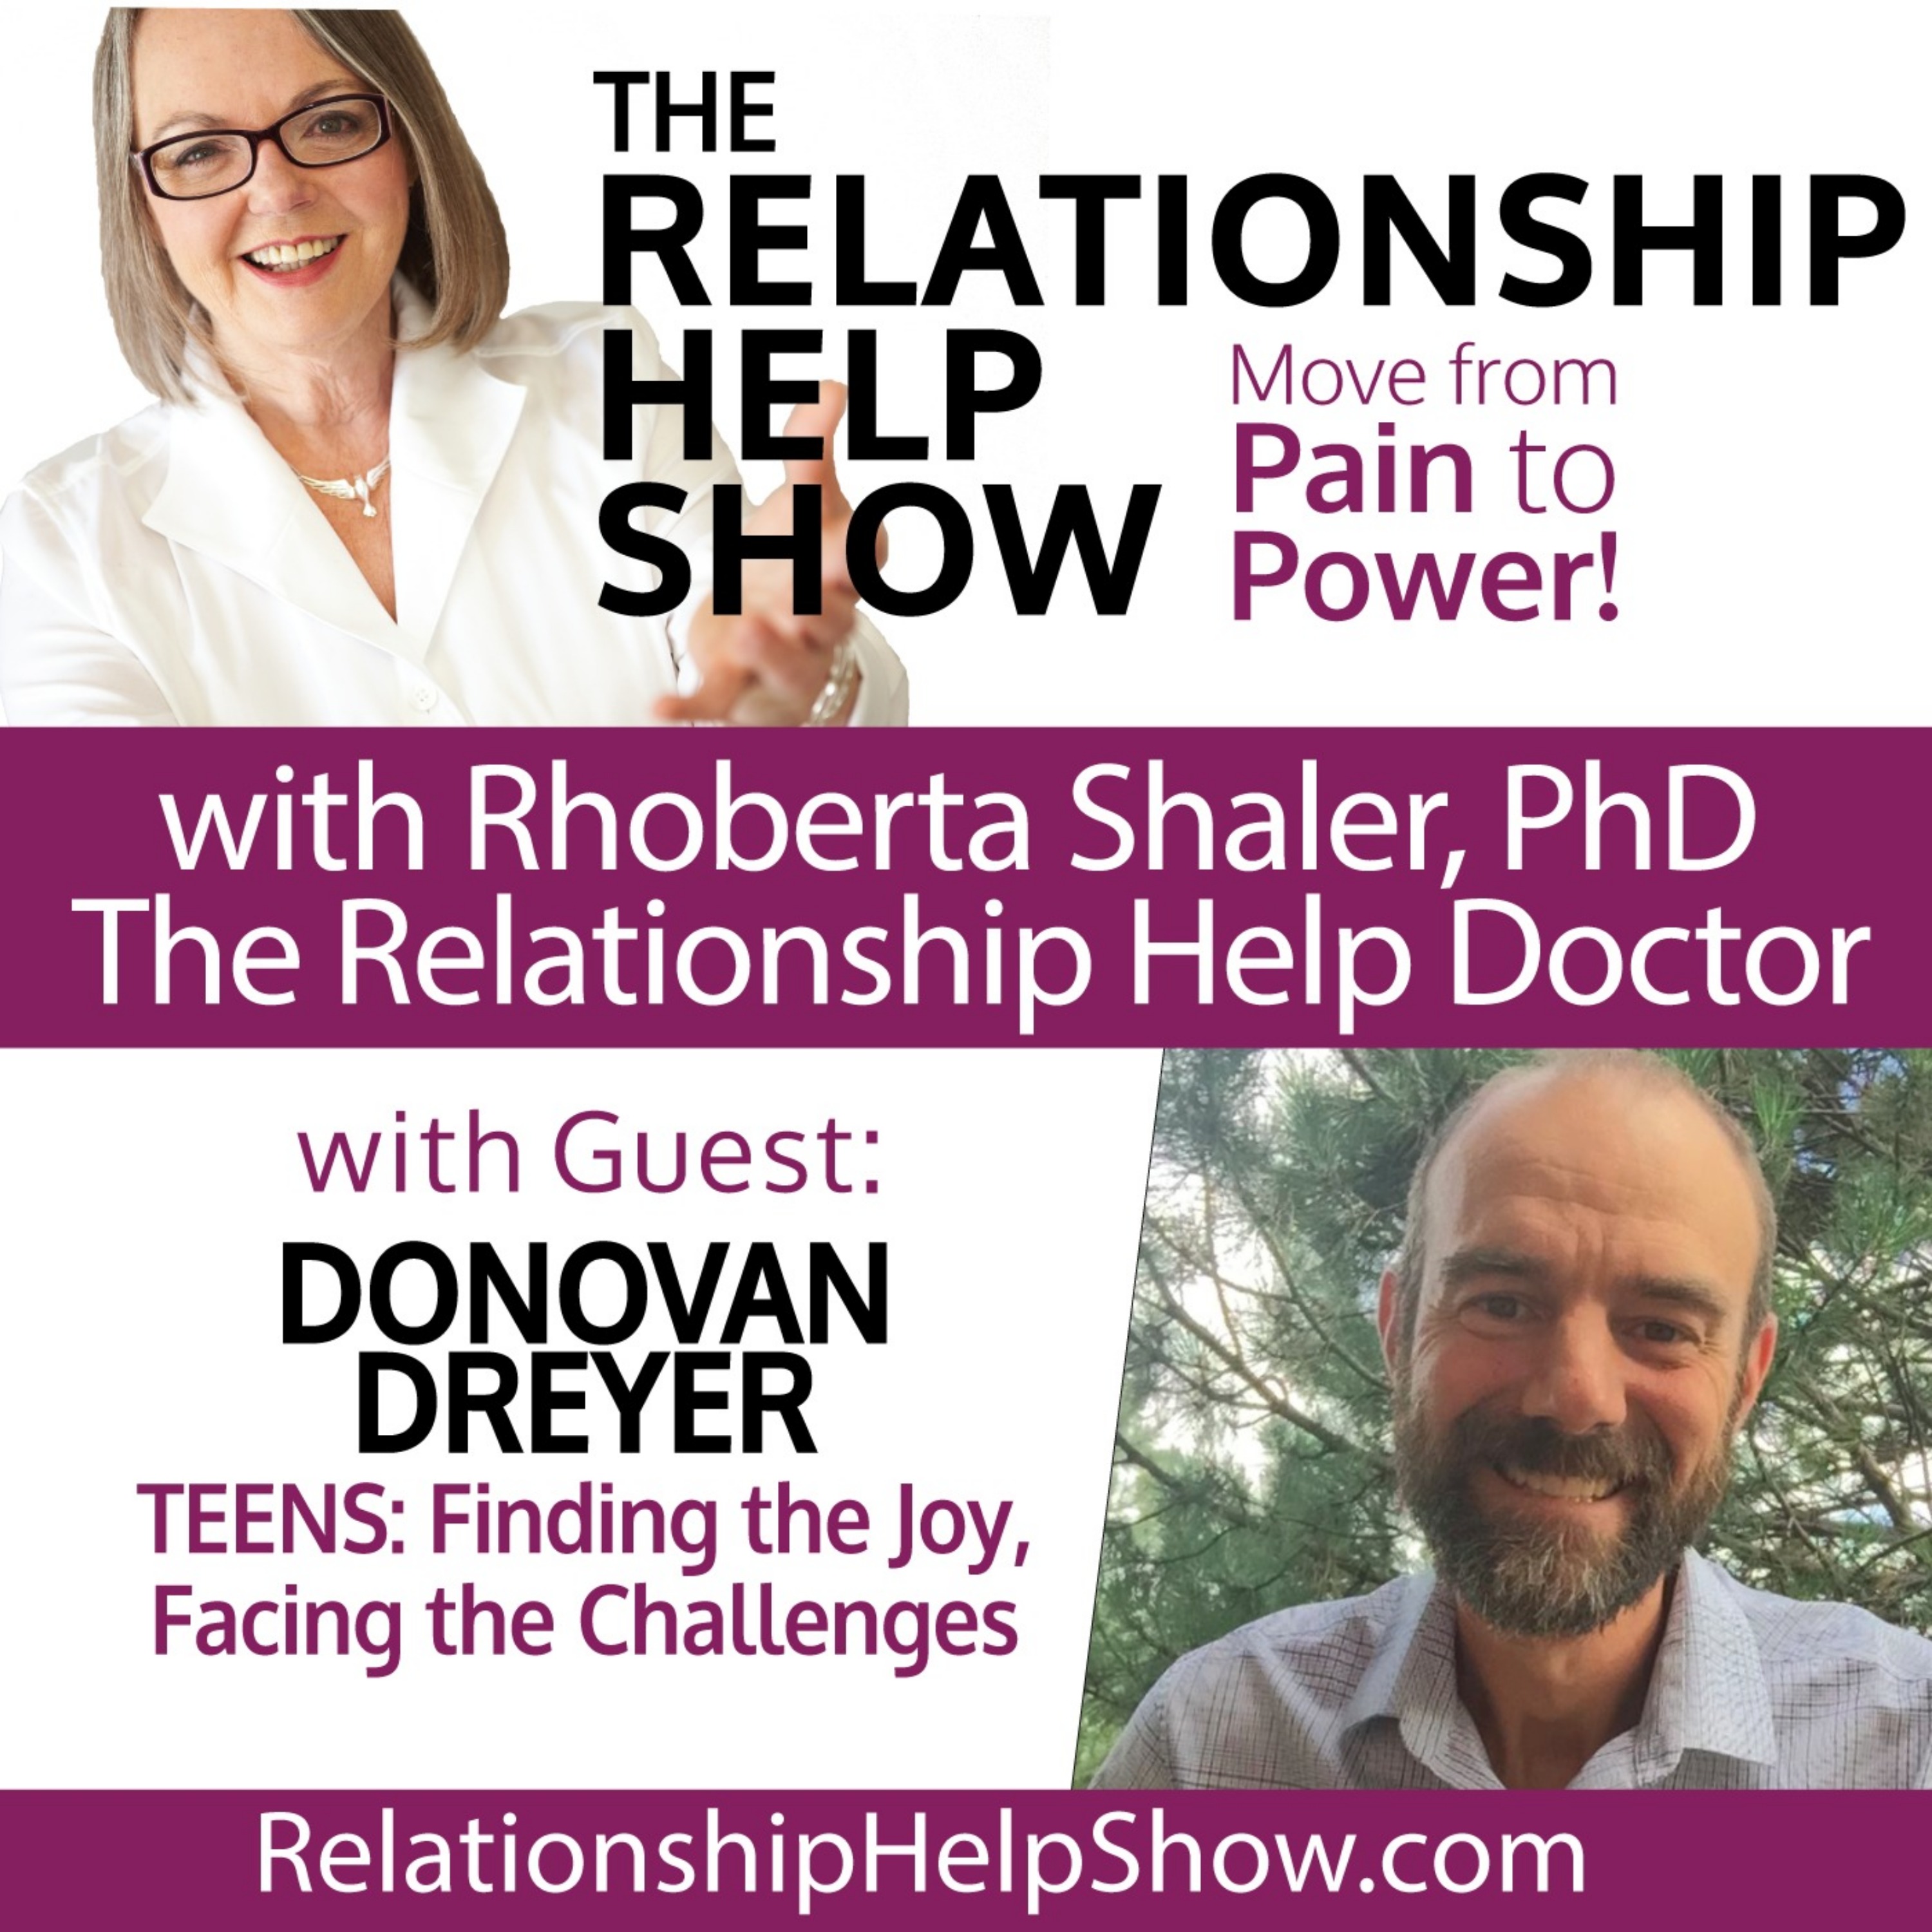 Teens: Finding the Joy, Facing the Challenges  Guest: Donovan Dreyer